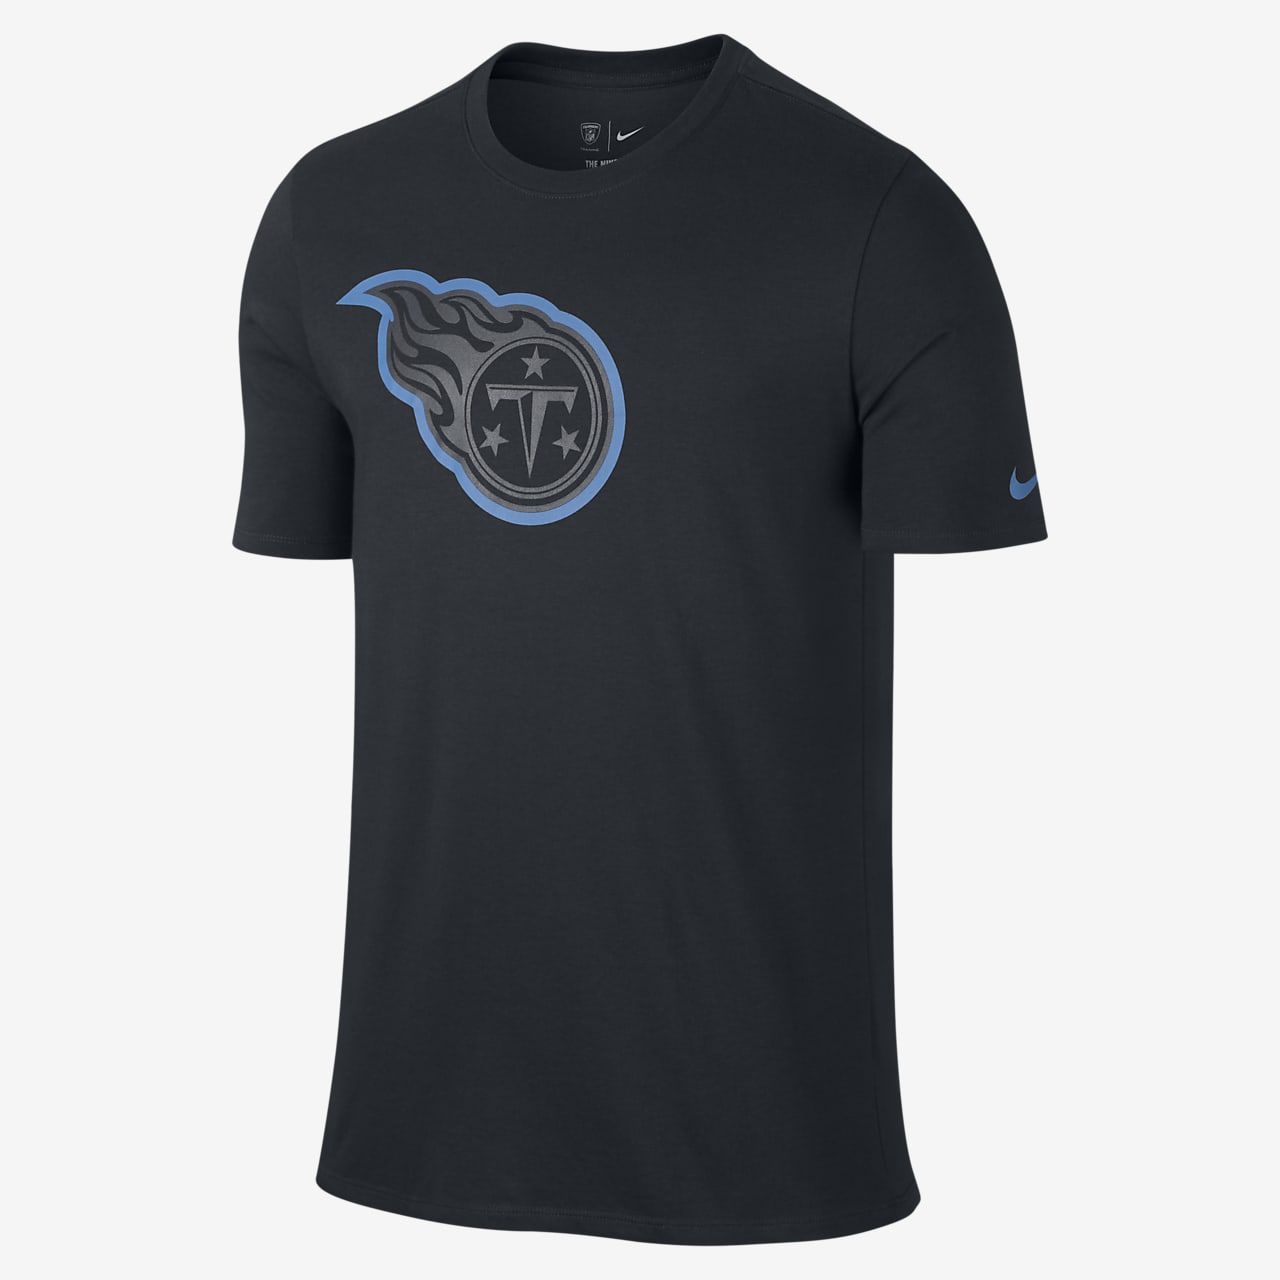 Tee-shirt Nike 2016 Travel (NFL Titans) pour Homme